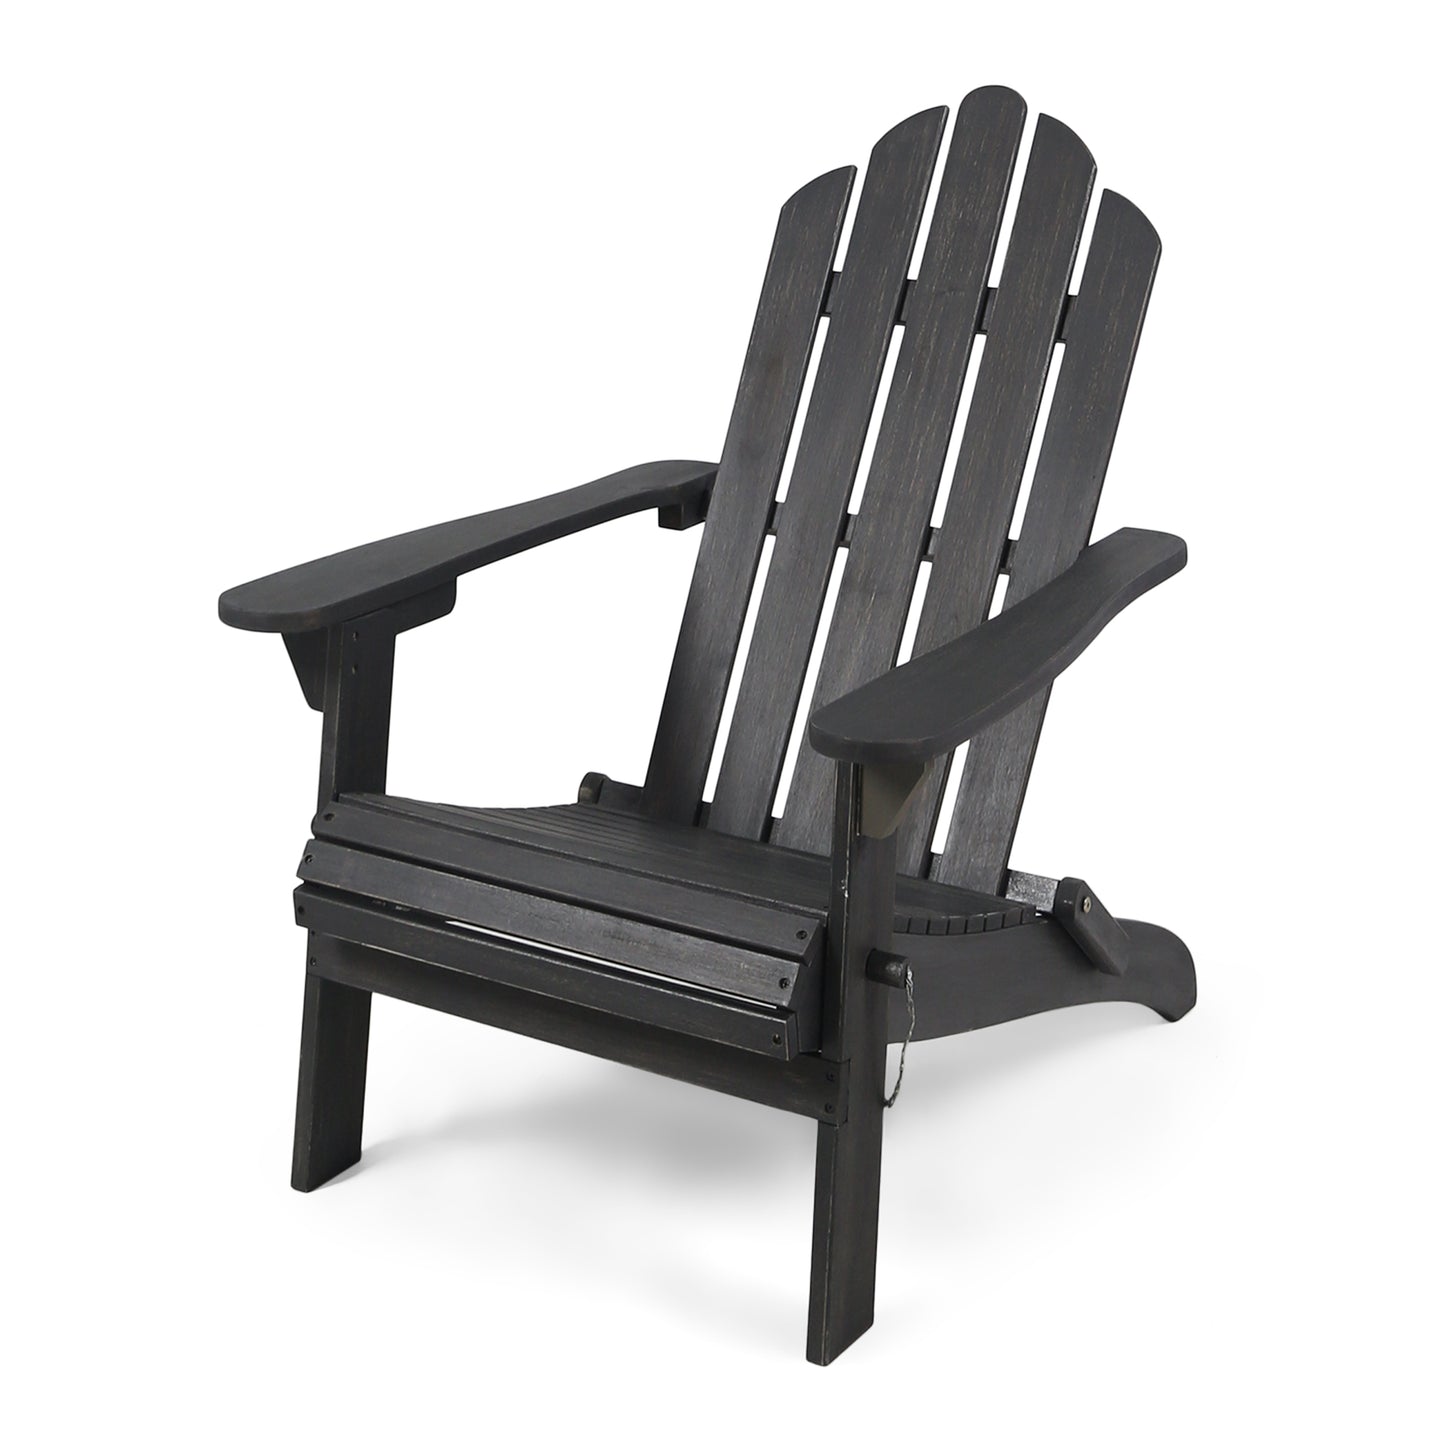 Dark Gray Hollywood Foldable Solid Wood ADIRONDACK Chair